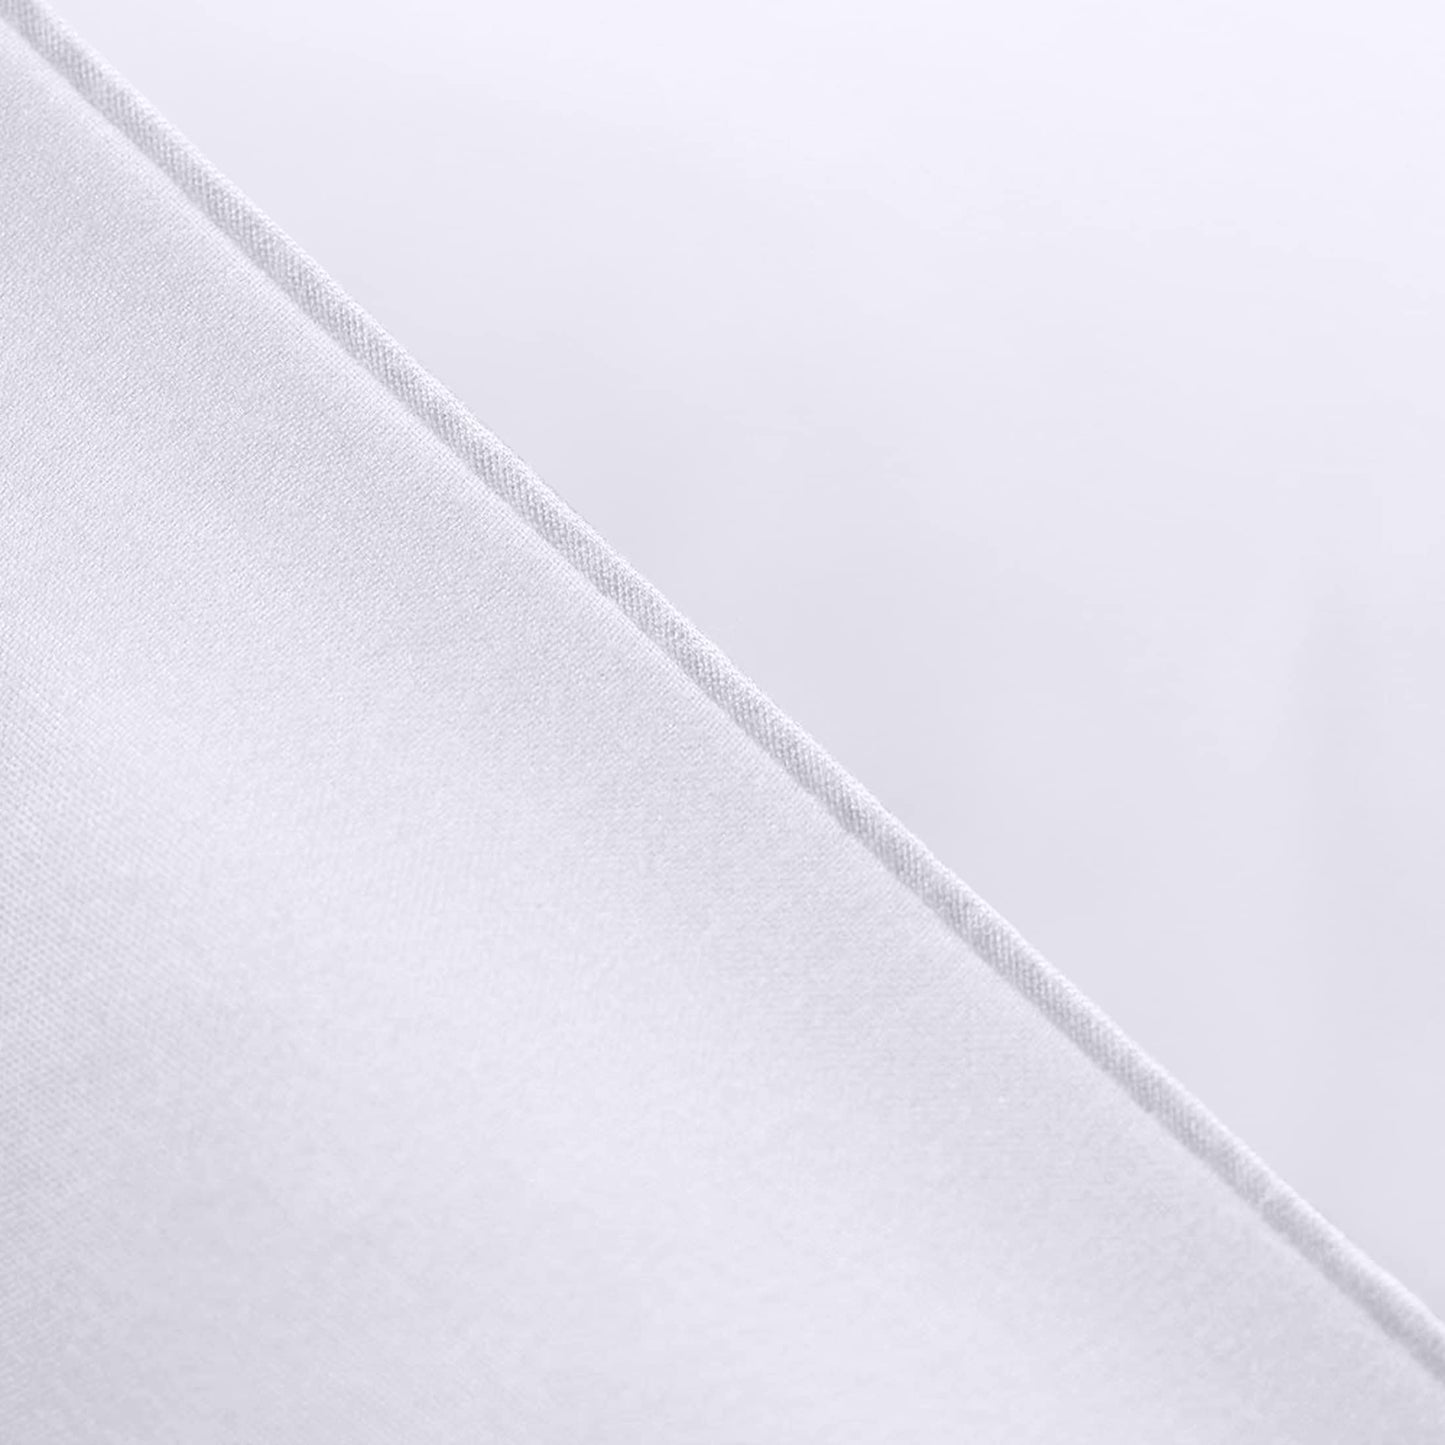 Utopia Bedding Down Alternative Twin XL Comforter - All Season Comforter, Plush Siliconized Fiberfill Duvet Insert, Box Stitched (Twin XL, White)